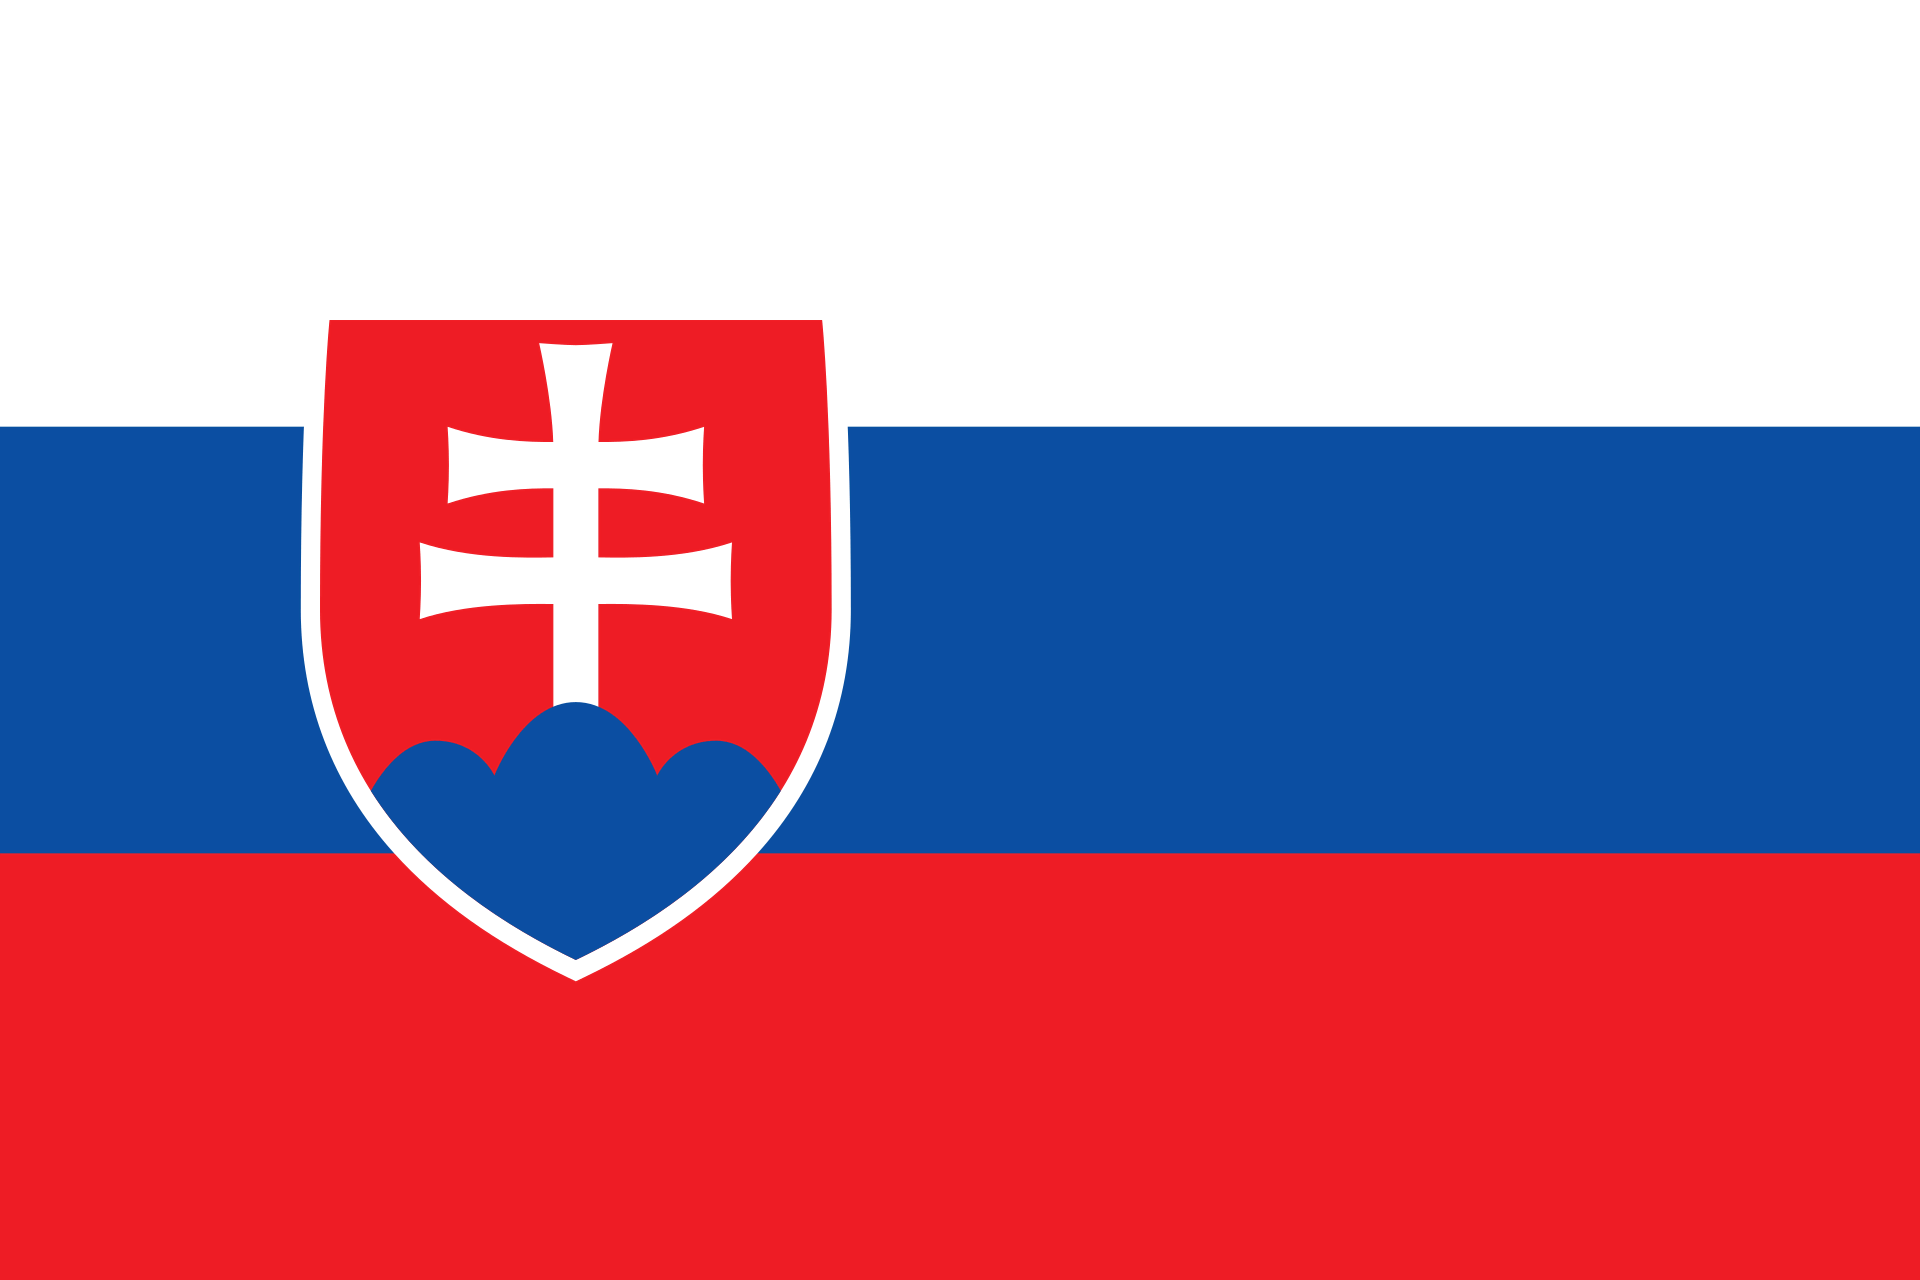 Quốc kỳ của Slovakia